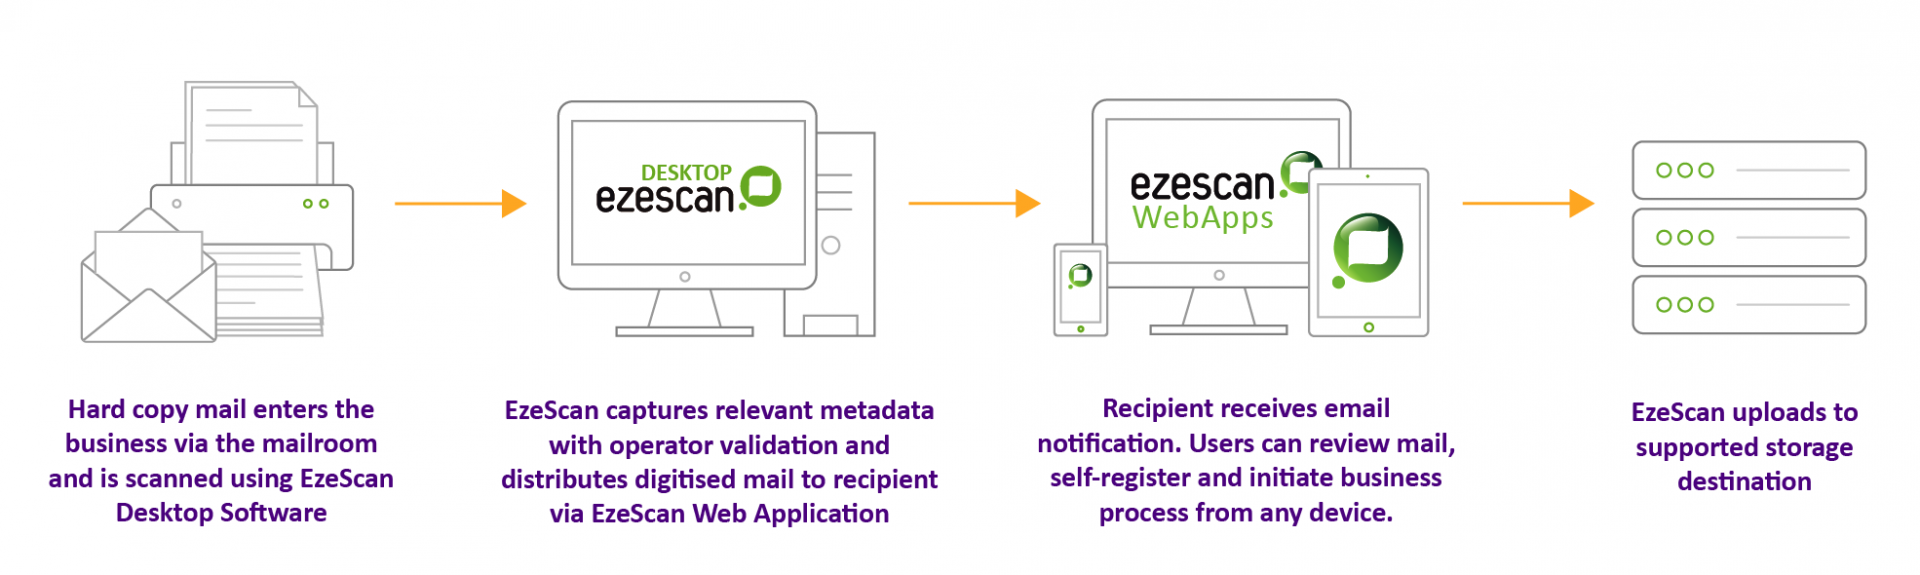 EzeScan Digital Mailroom Workflow.png